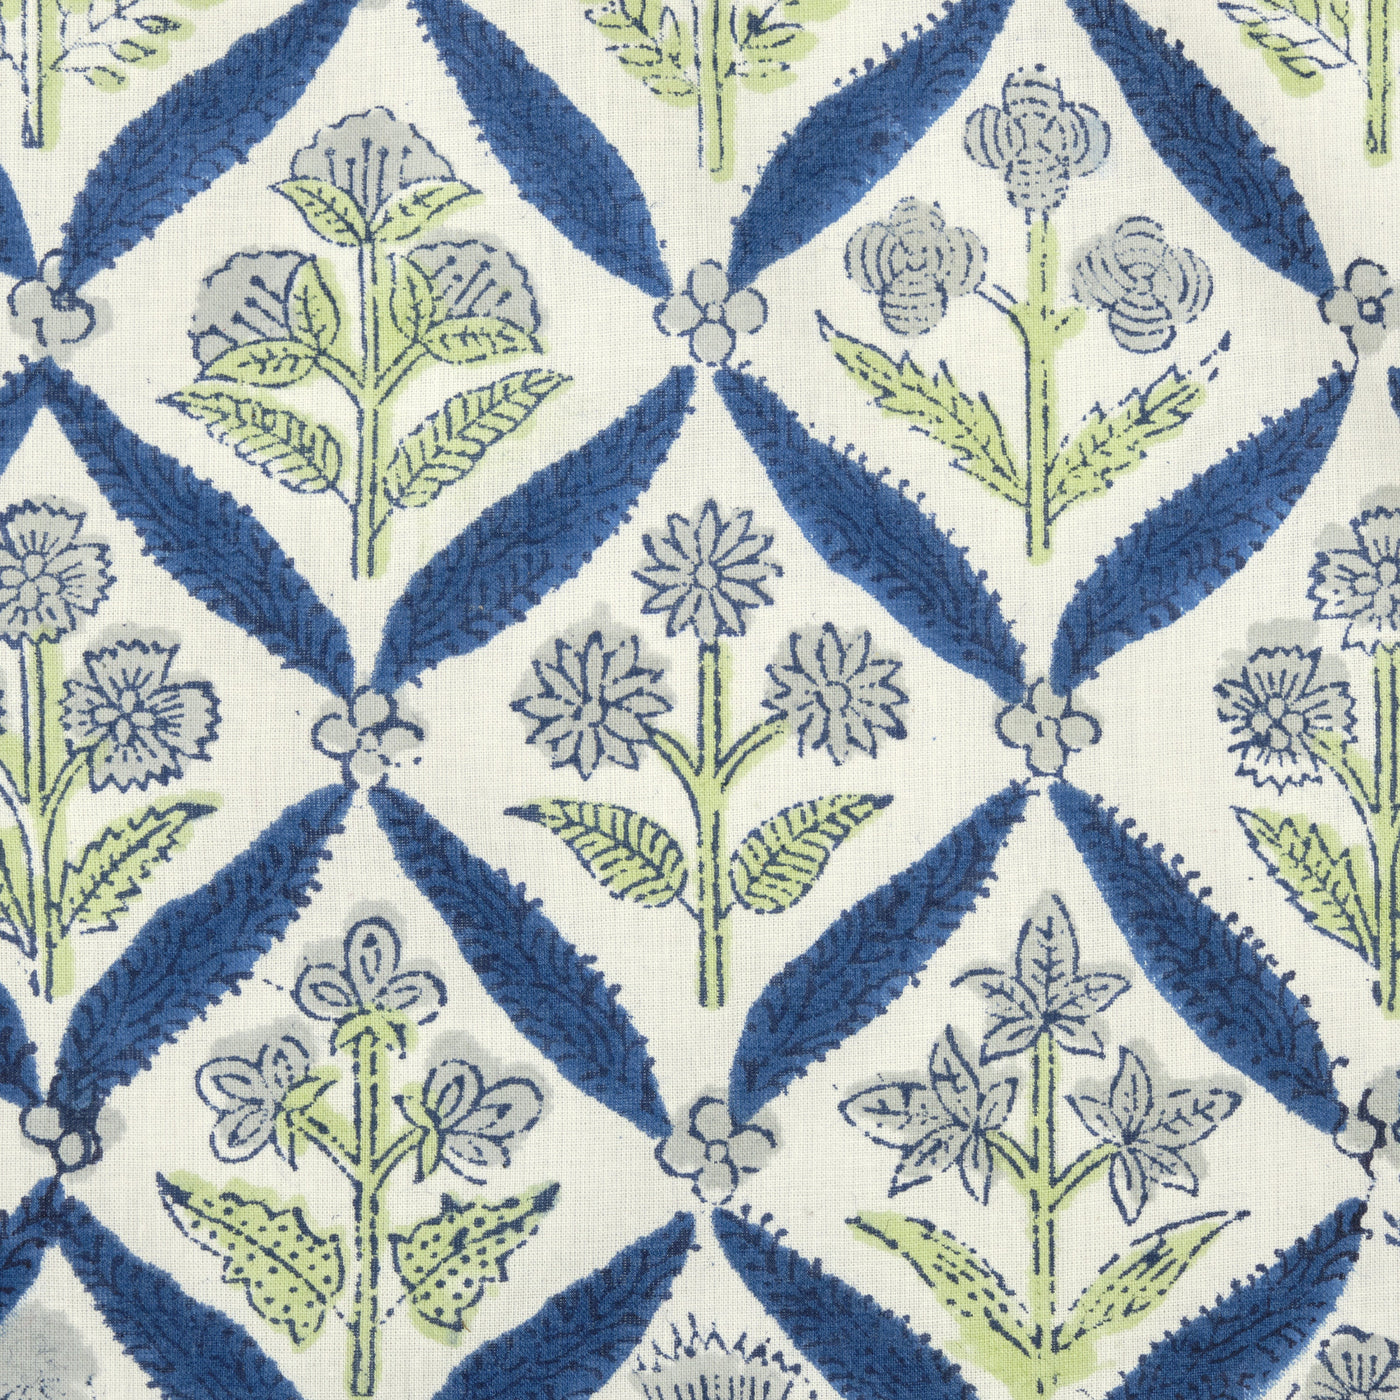 Fabricrush Denim, Stone Blue, Olive Green Indian Hand Block Floral Printed Cotton Cloth Reusable Napkins